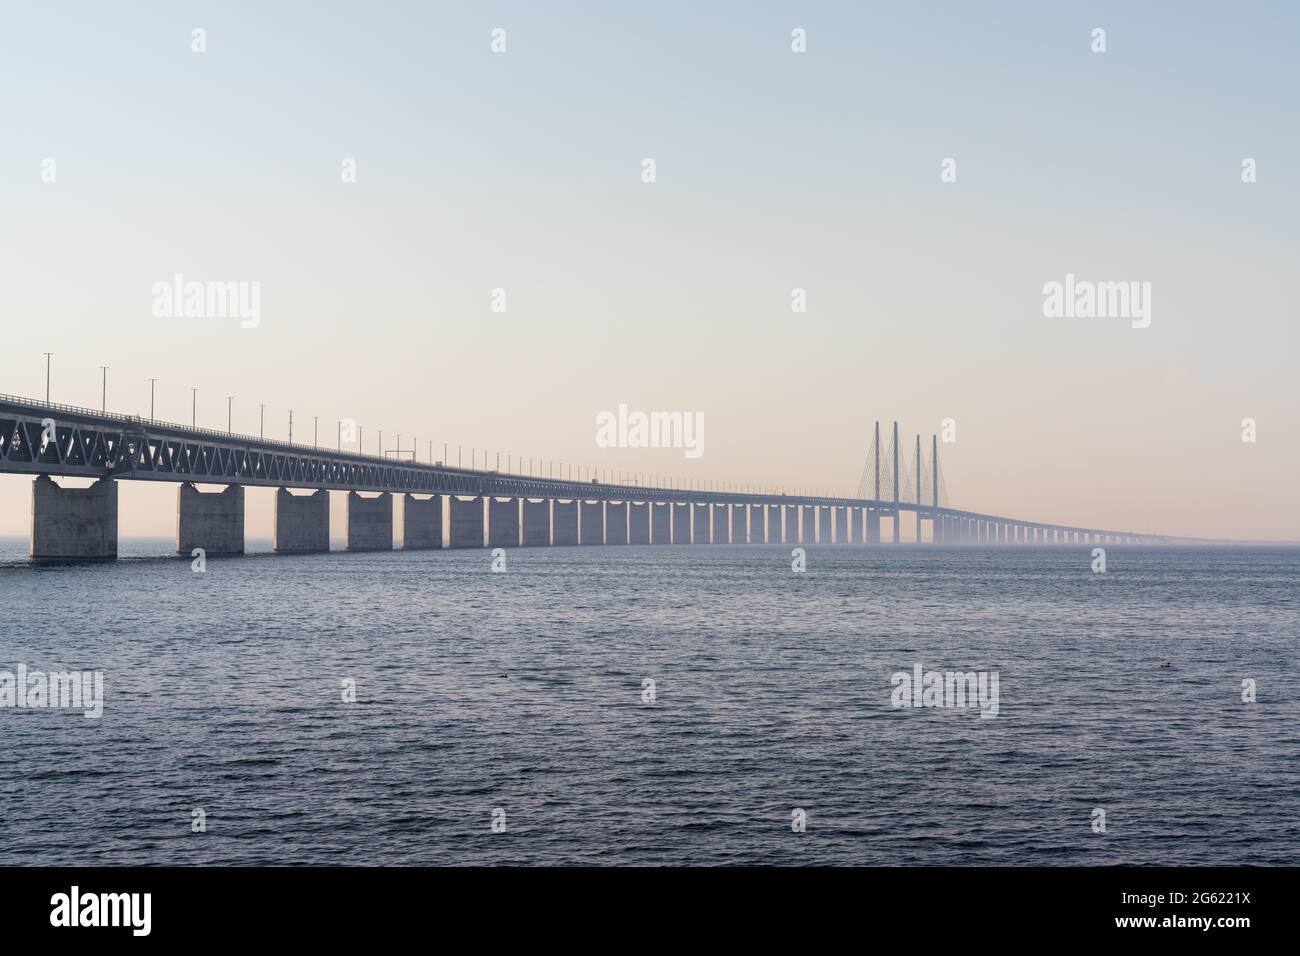 A view of the landmark Oresund Bridge between Denmark and Sweden Stock Photo